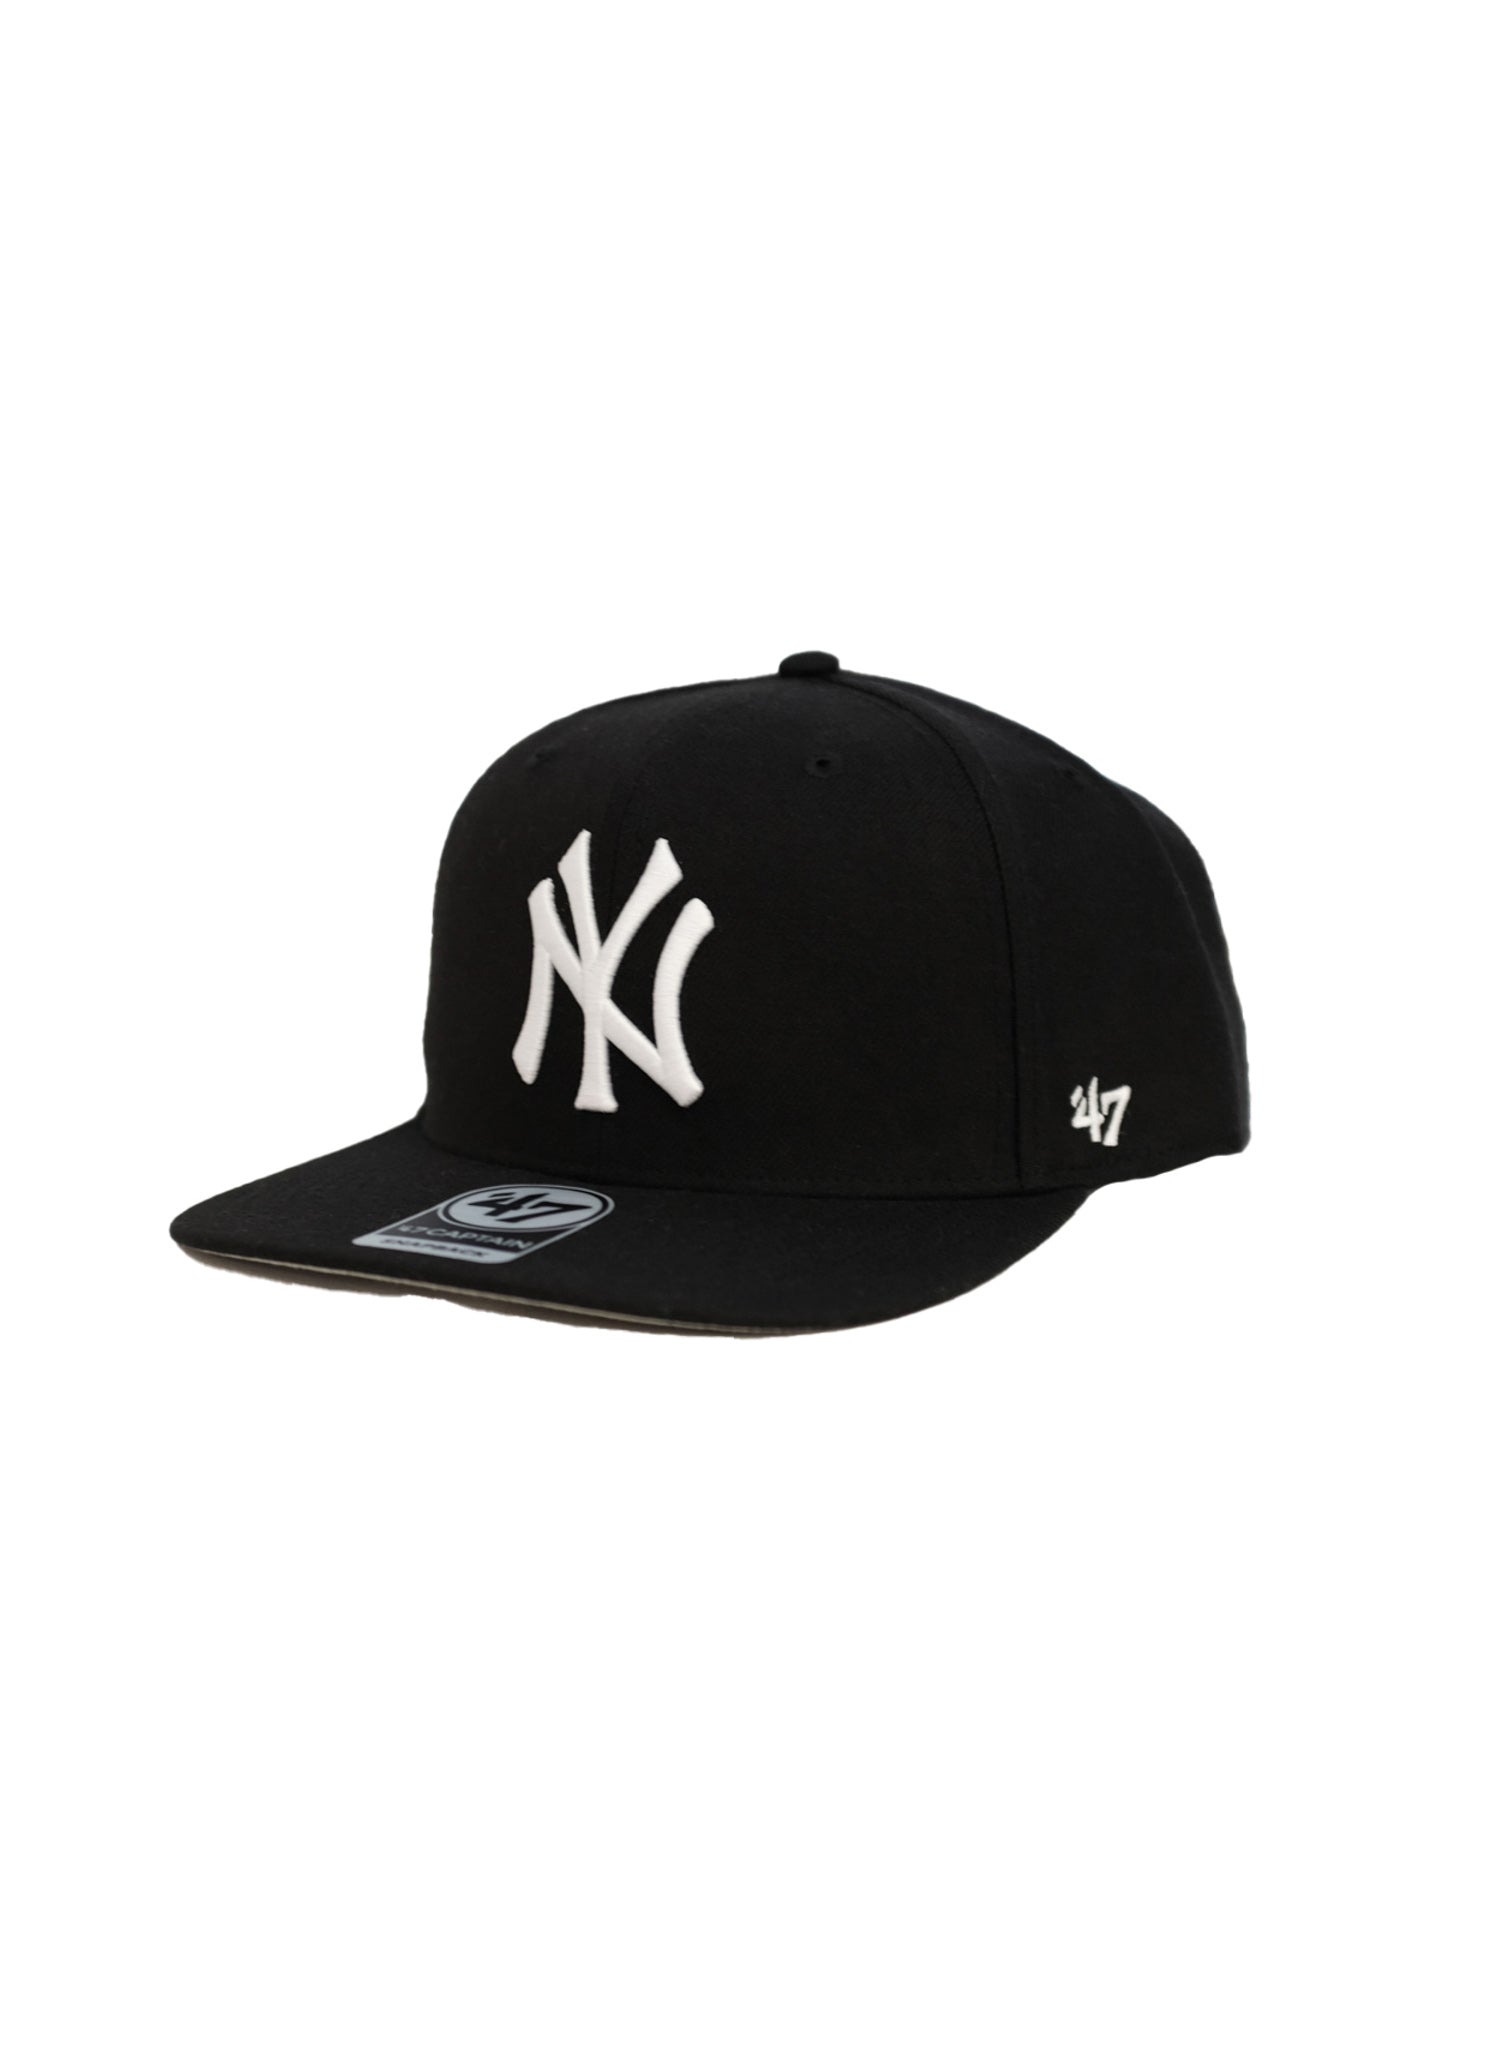 NY Yankees / Sure Shot ’47 CAPTAIN BLACK